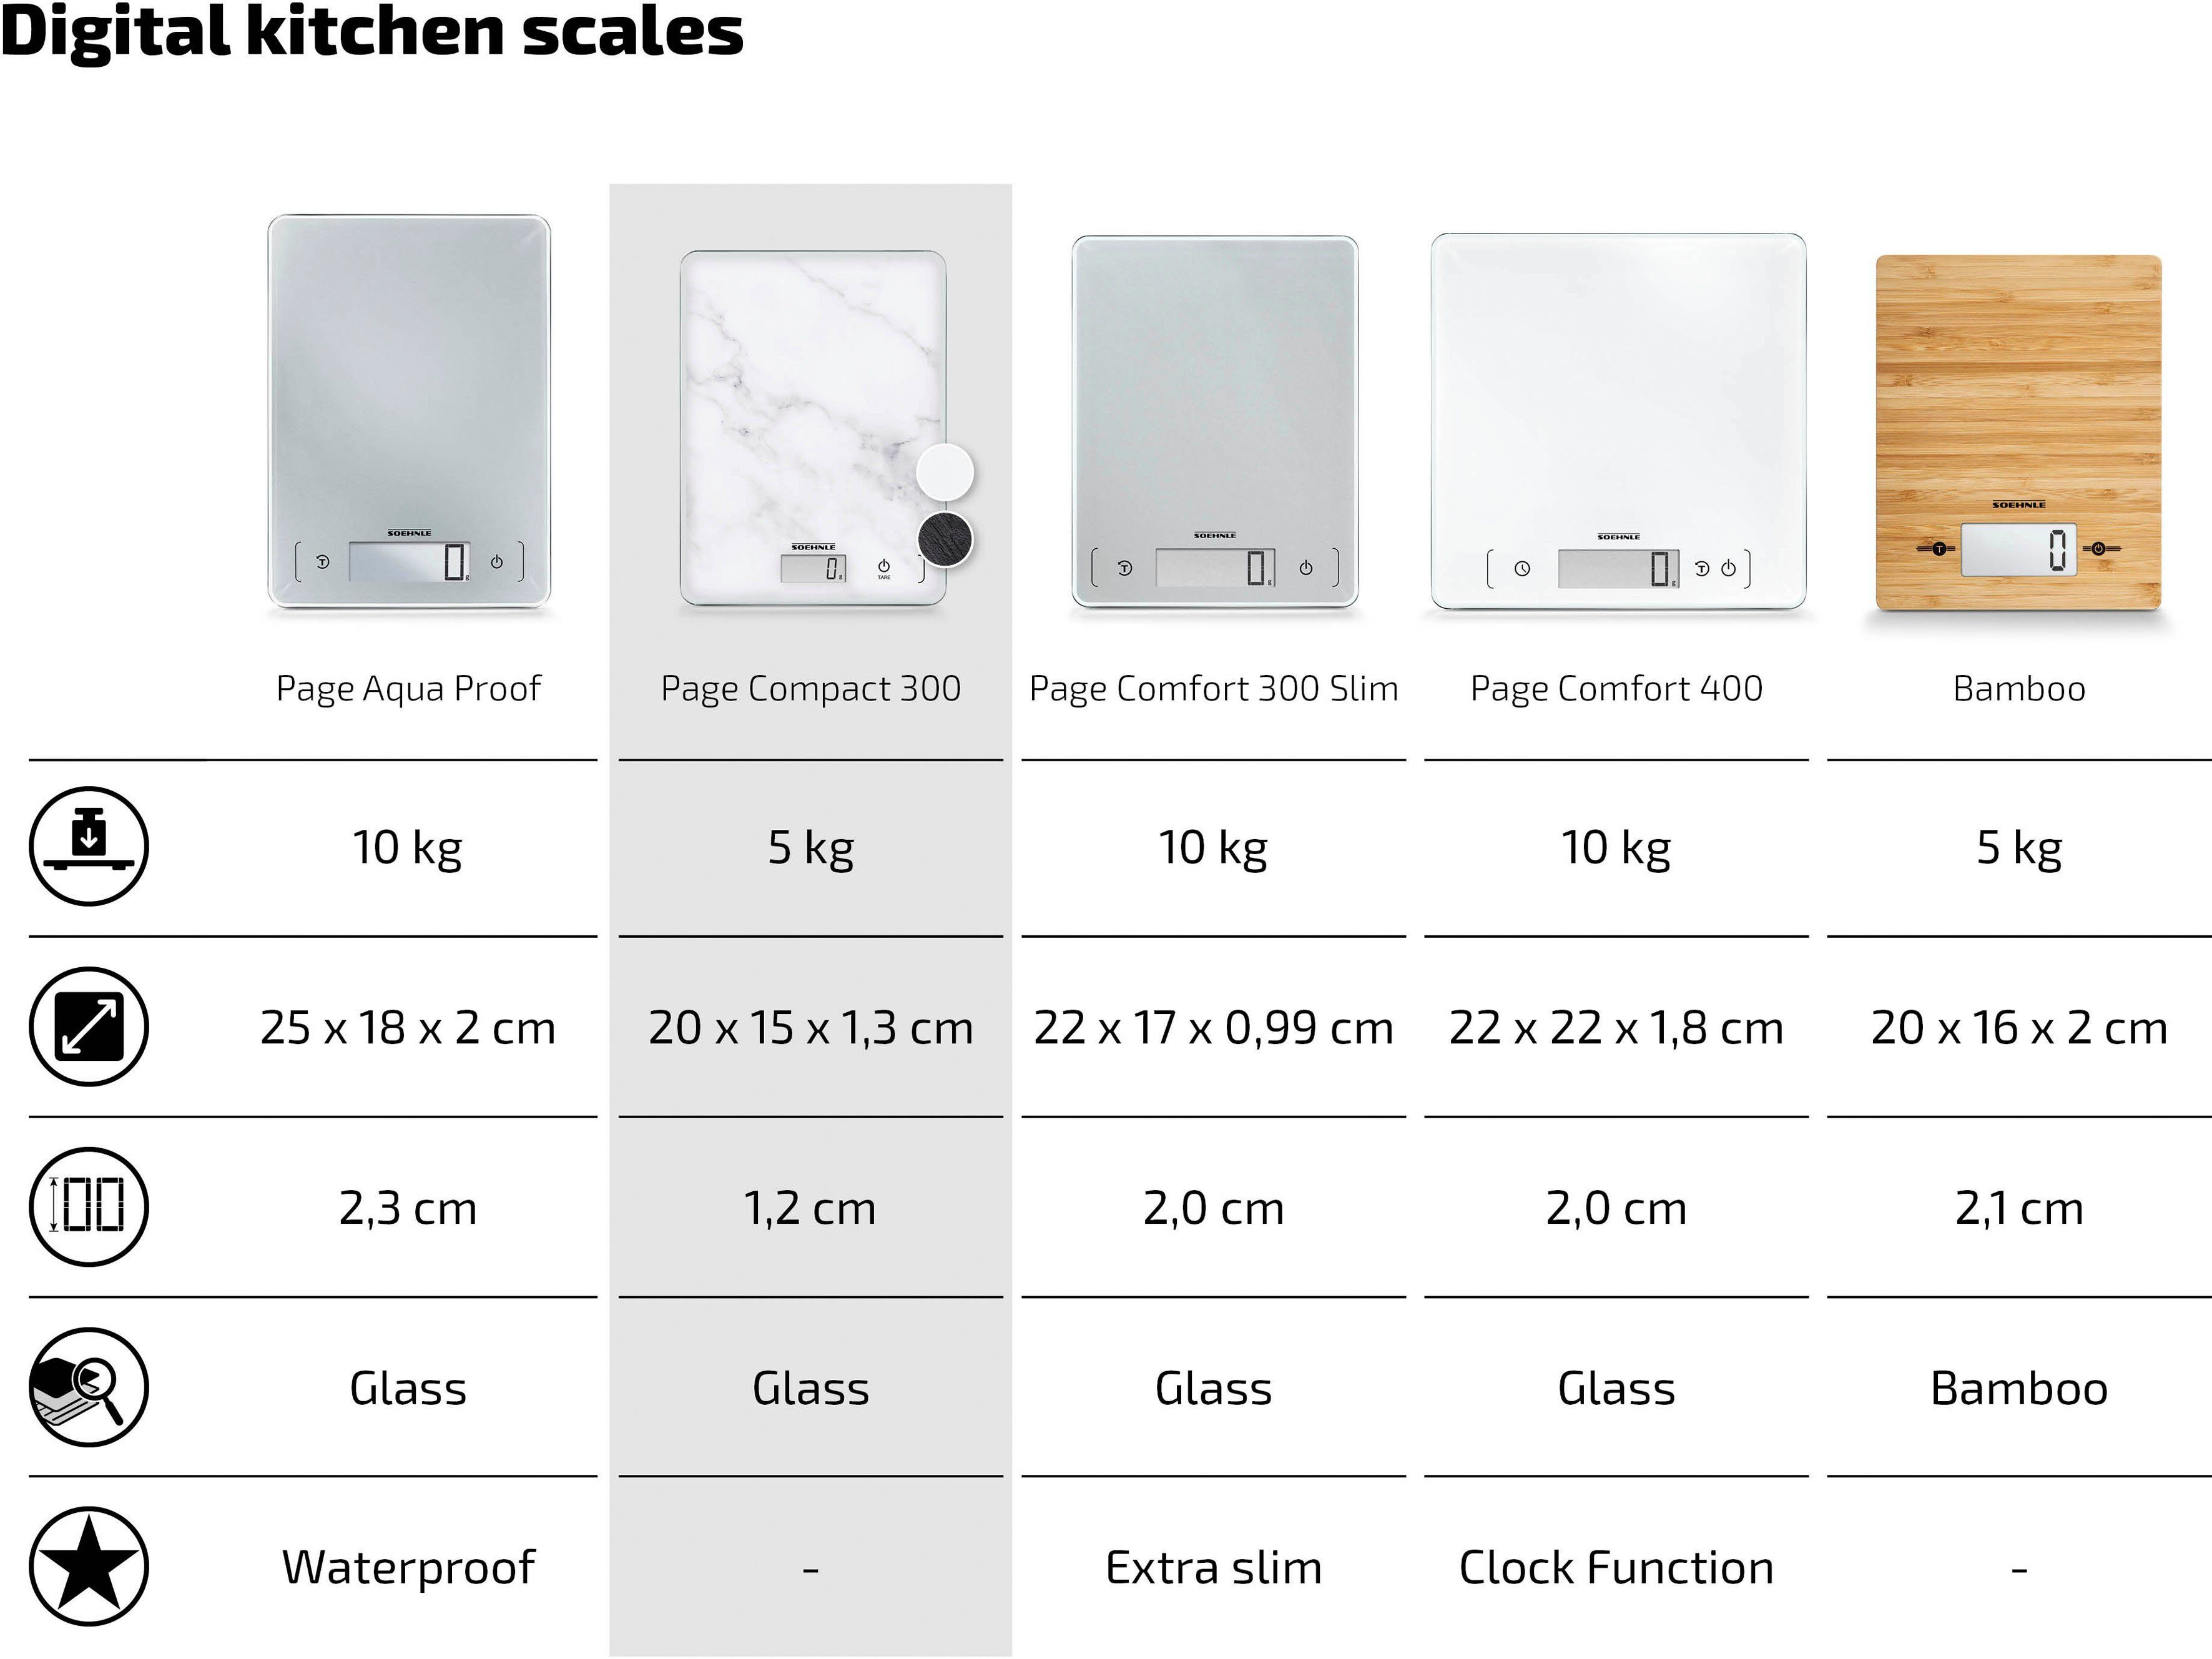 1 5 Küchenwaage kg, Leifheit Tragkraft 300 Compact Soehnle Teilung g genaue Marble, Page